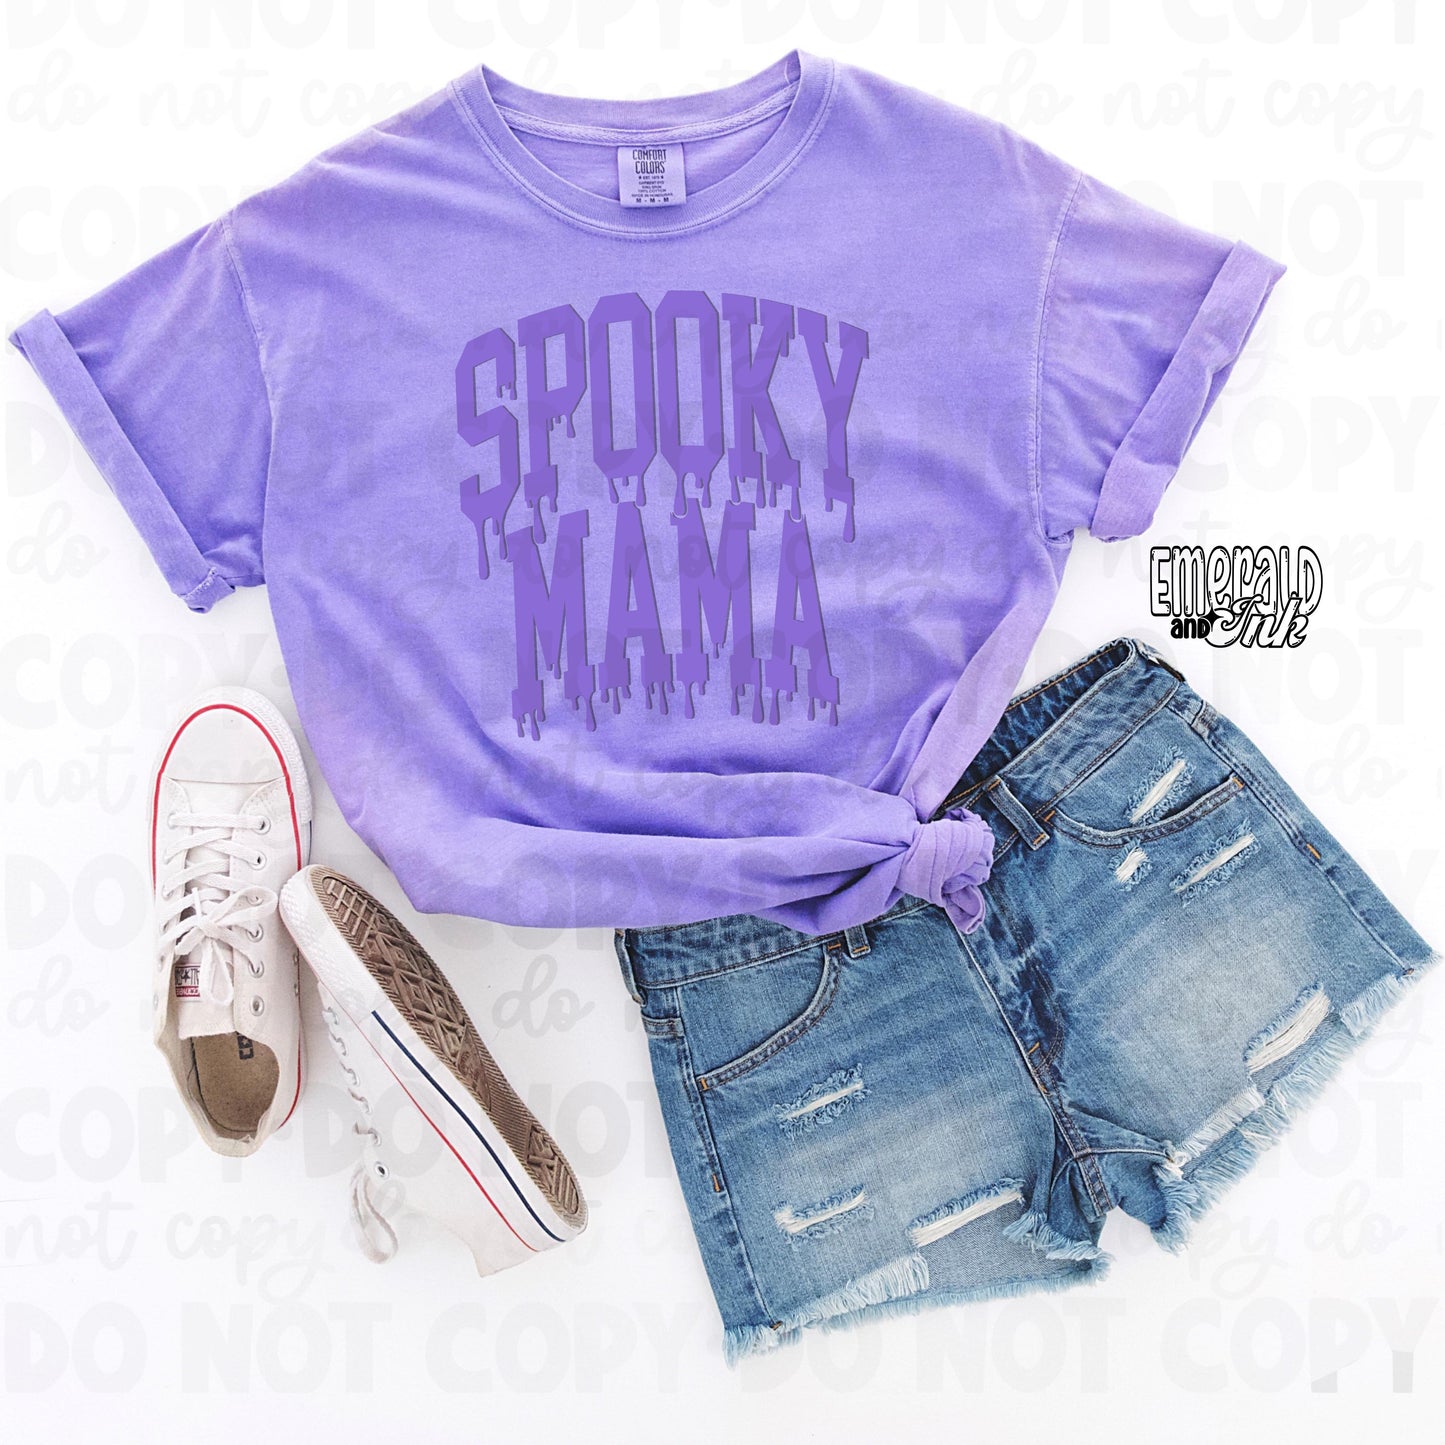 Spooky Mama (Purple) - puff screen print transfer 350°